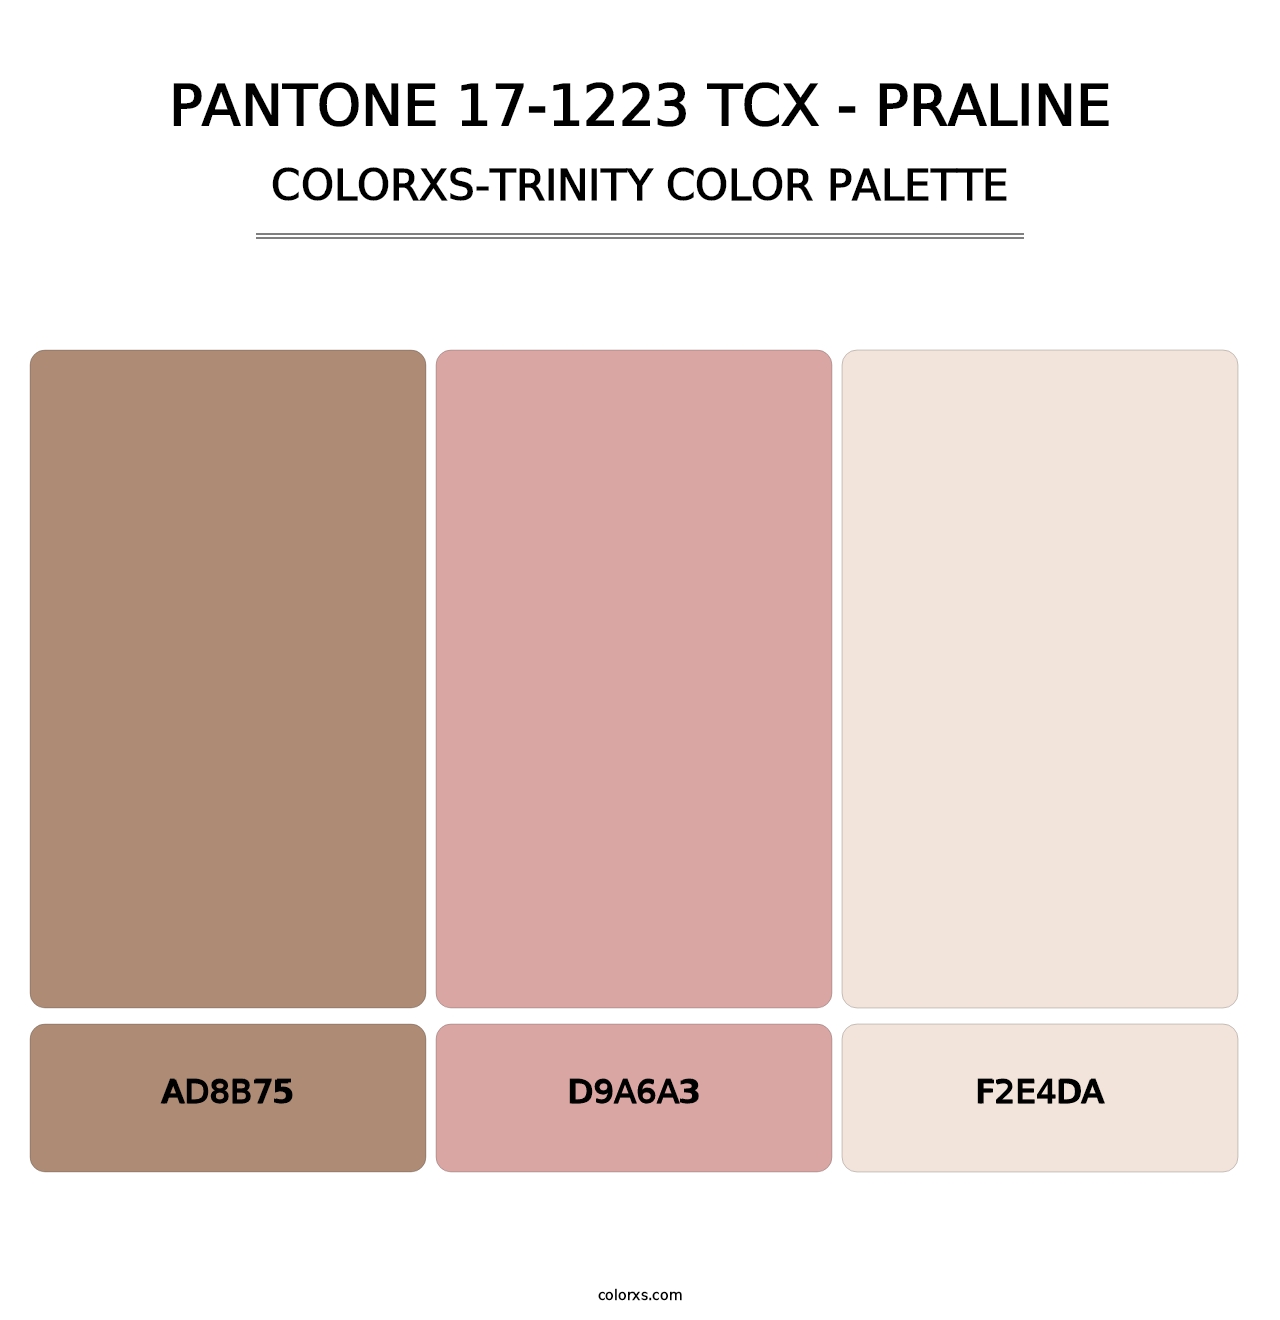 PANTONE 17-1223 TCX - Praline - Colorxs Trinity Palette